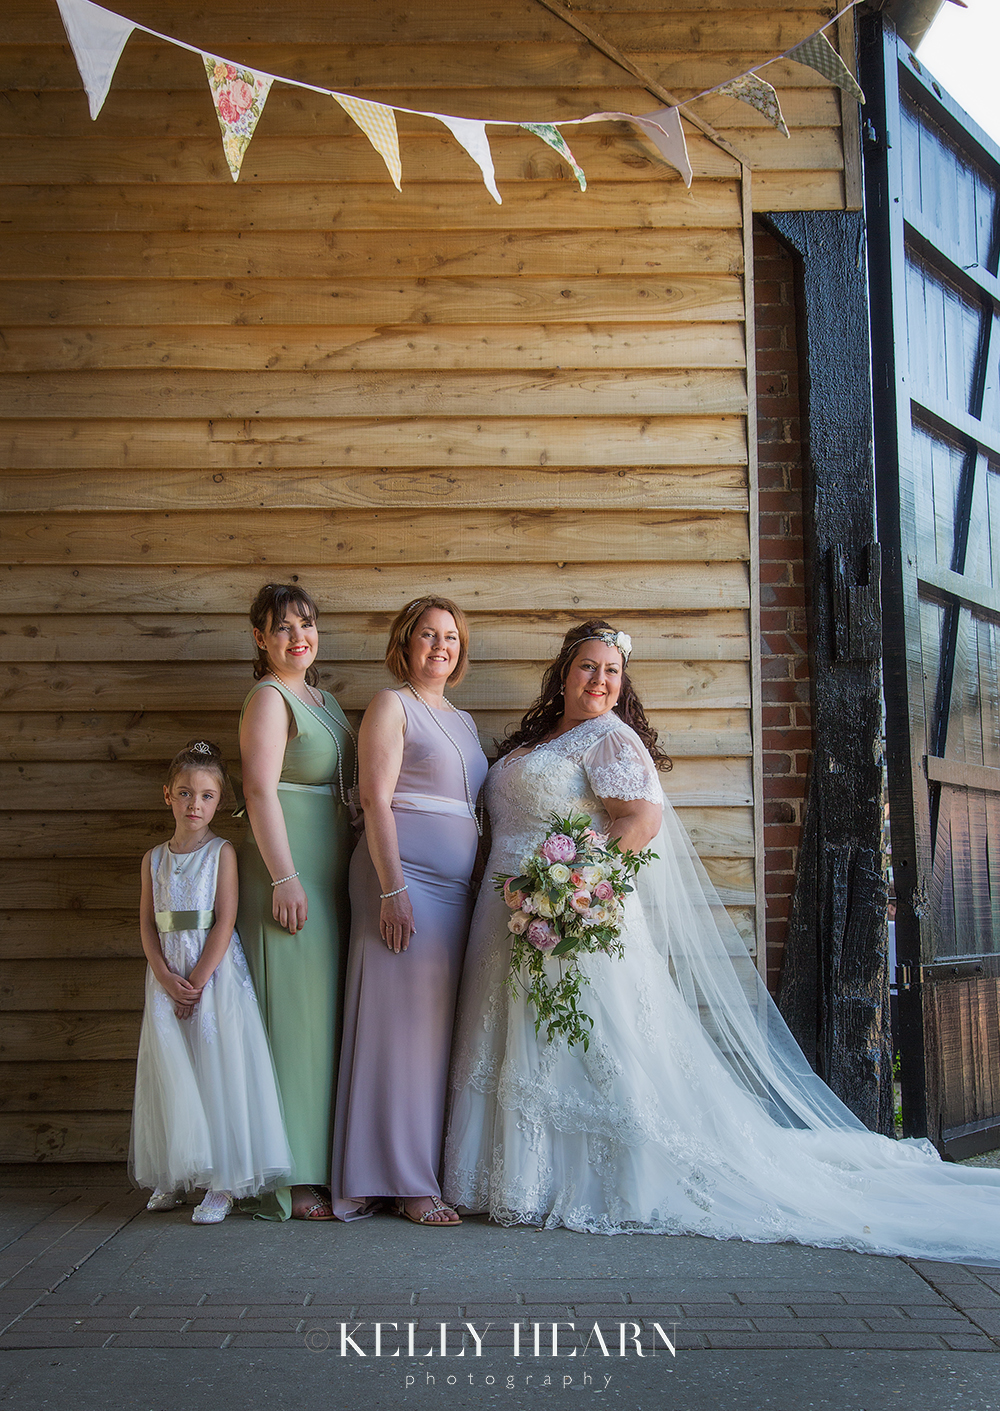 CAP_bride-bridesmaids-against-wooden-slats.jpg#asset:2051